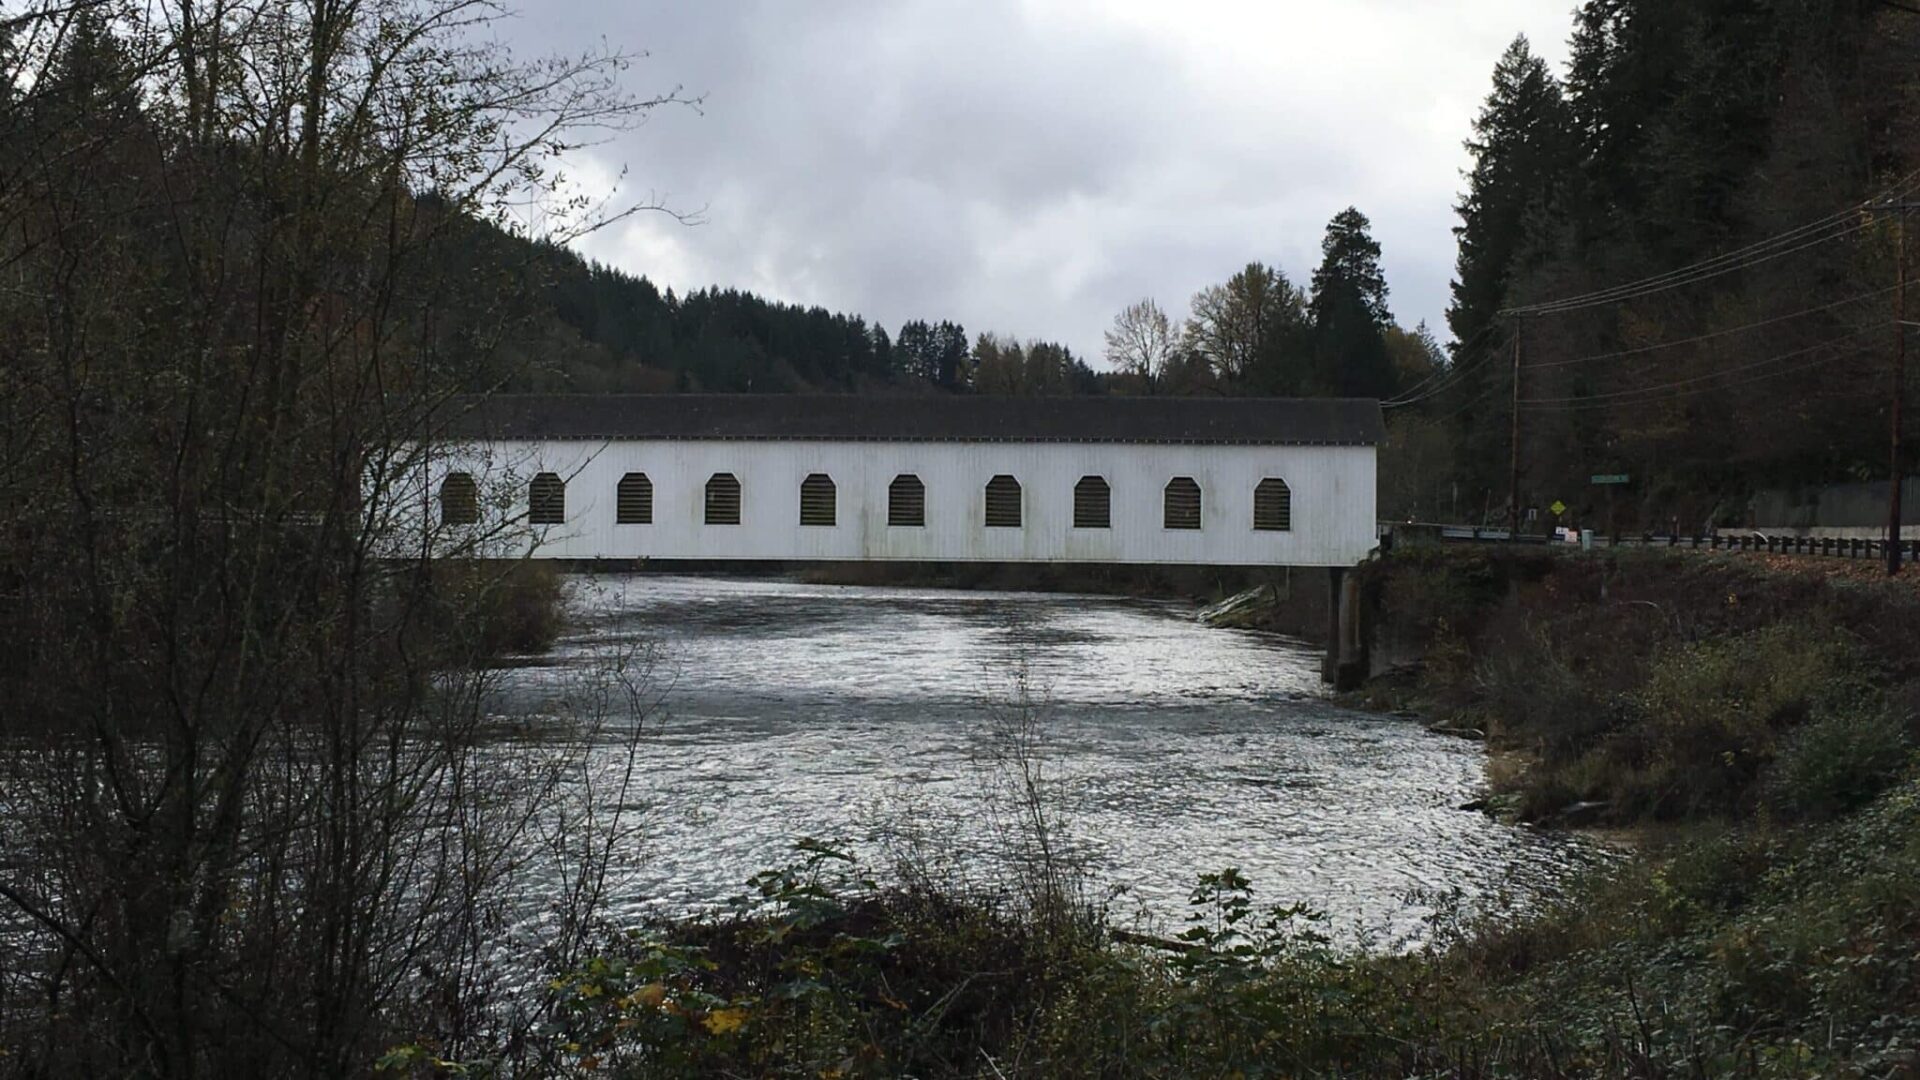 Good Pasture Historic Covered Bridge